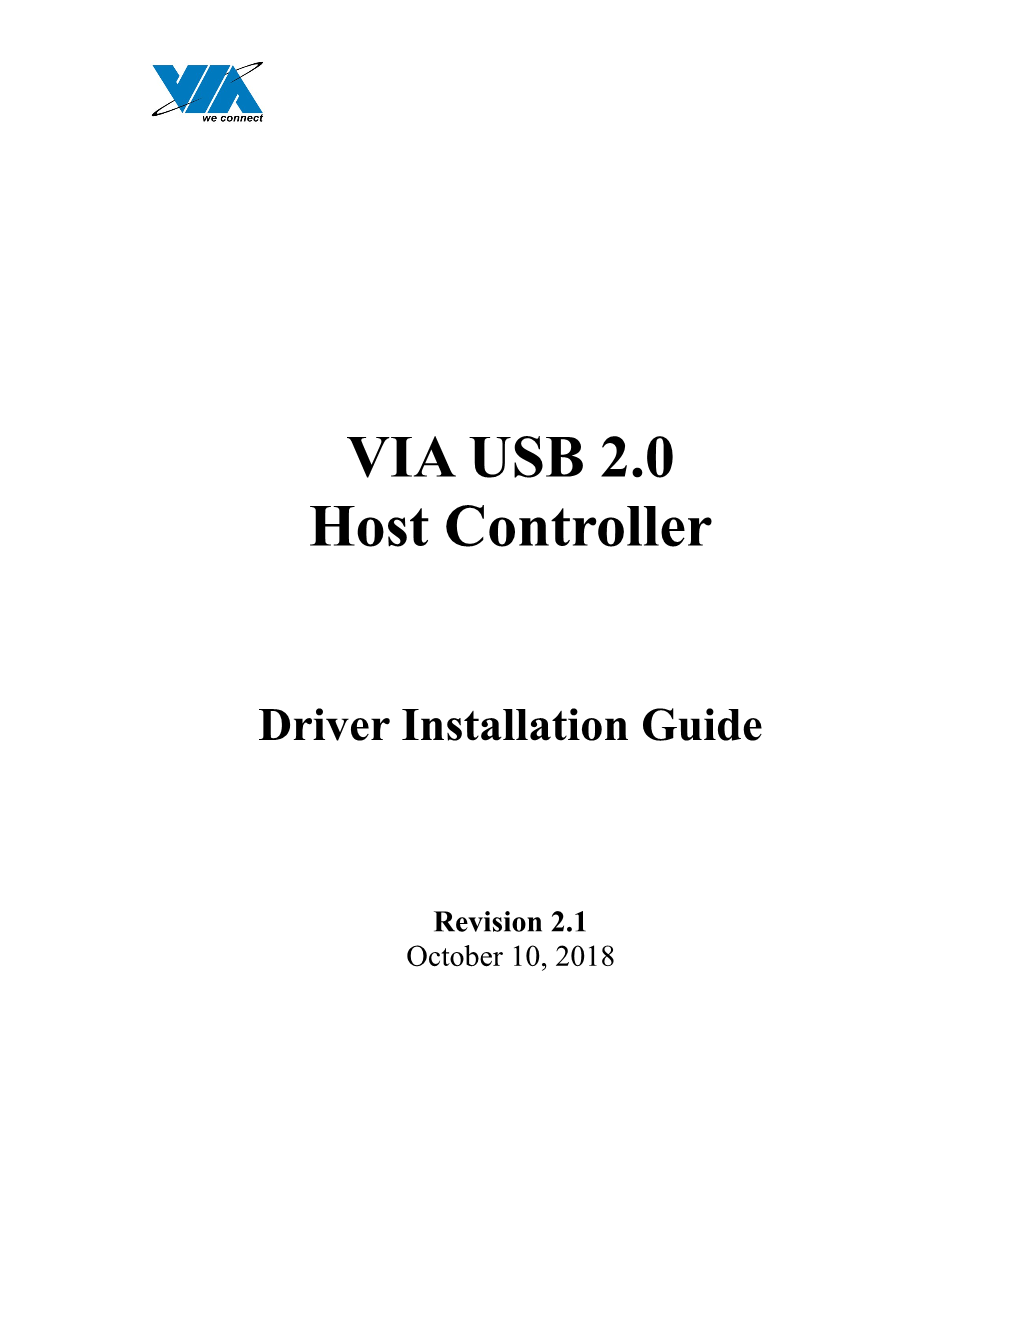 Driver Installation Guide